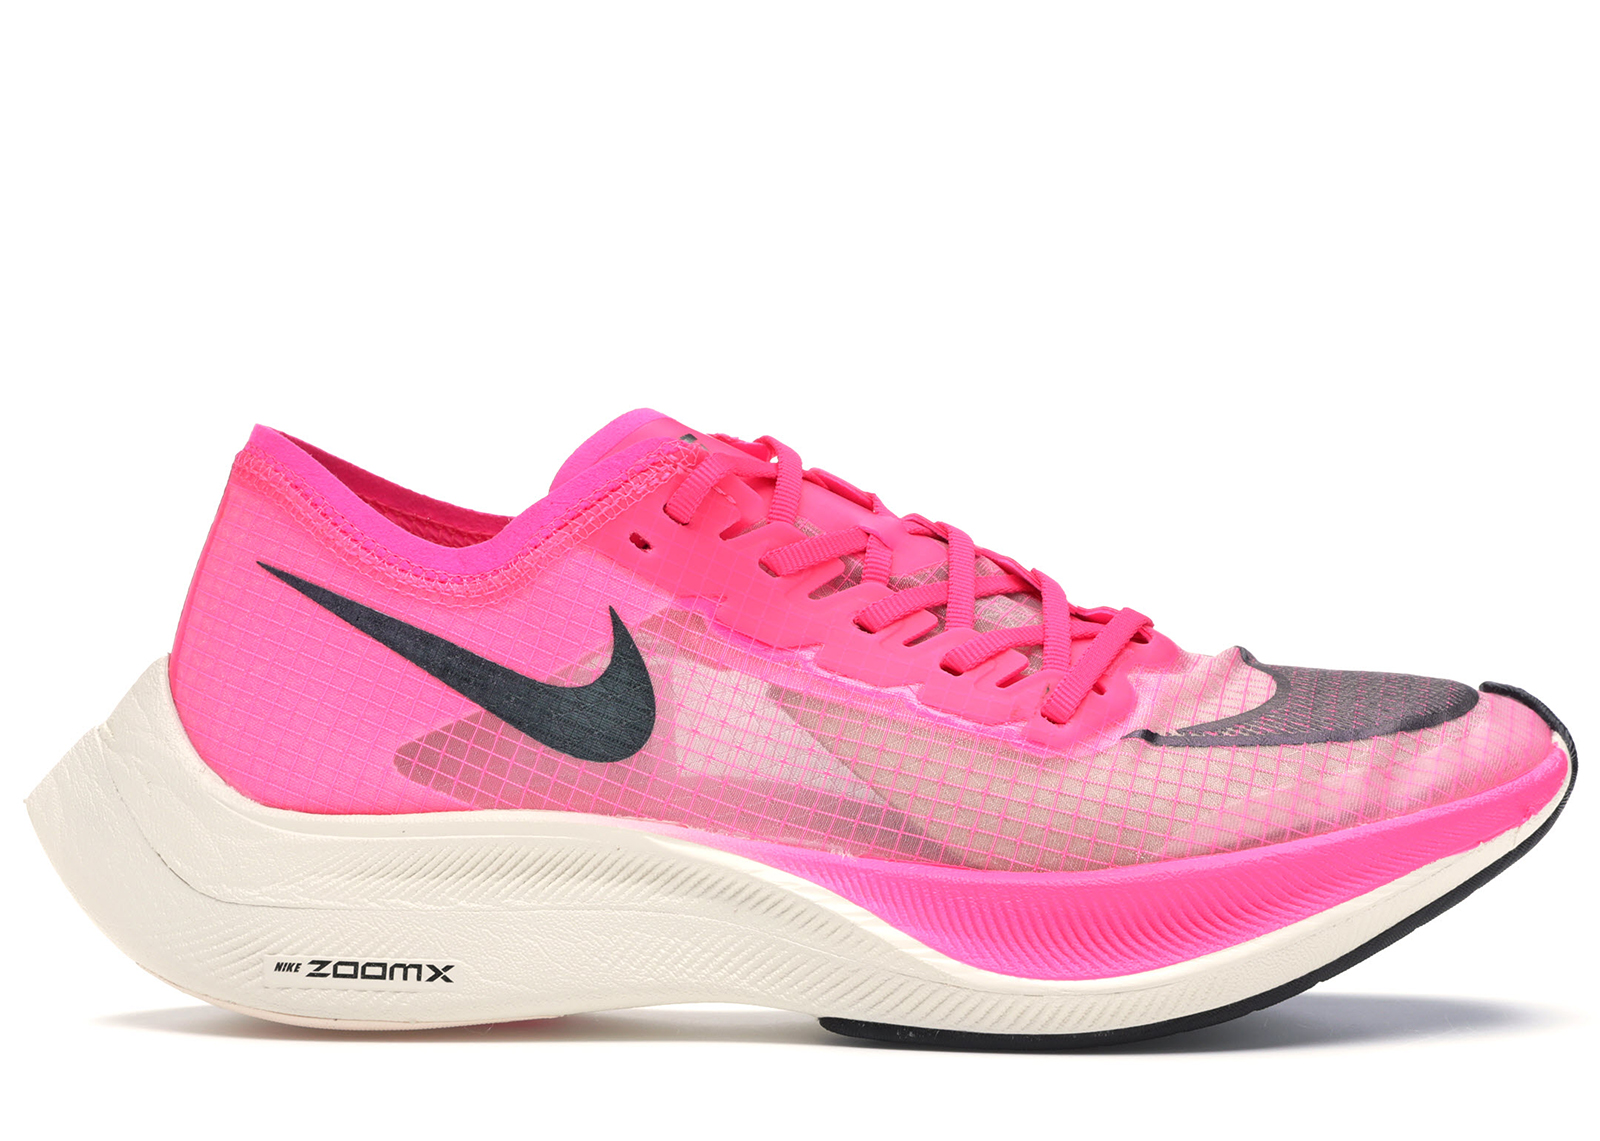 Nike ZoomX Vaporfly Next% Pink - AO4568 